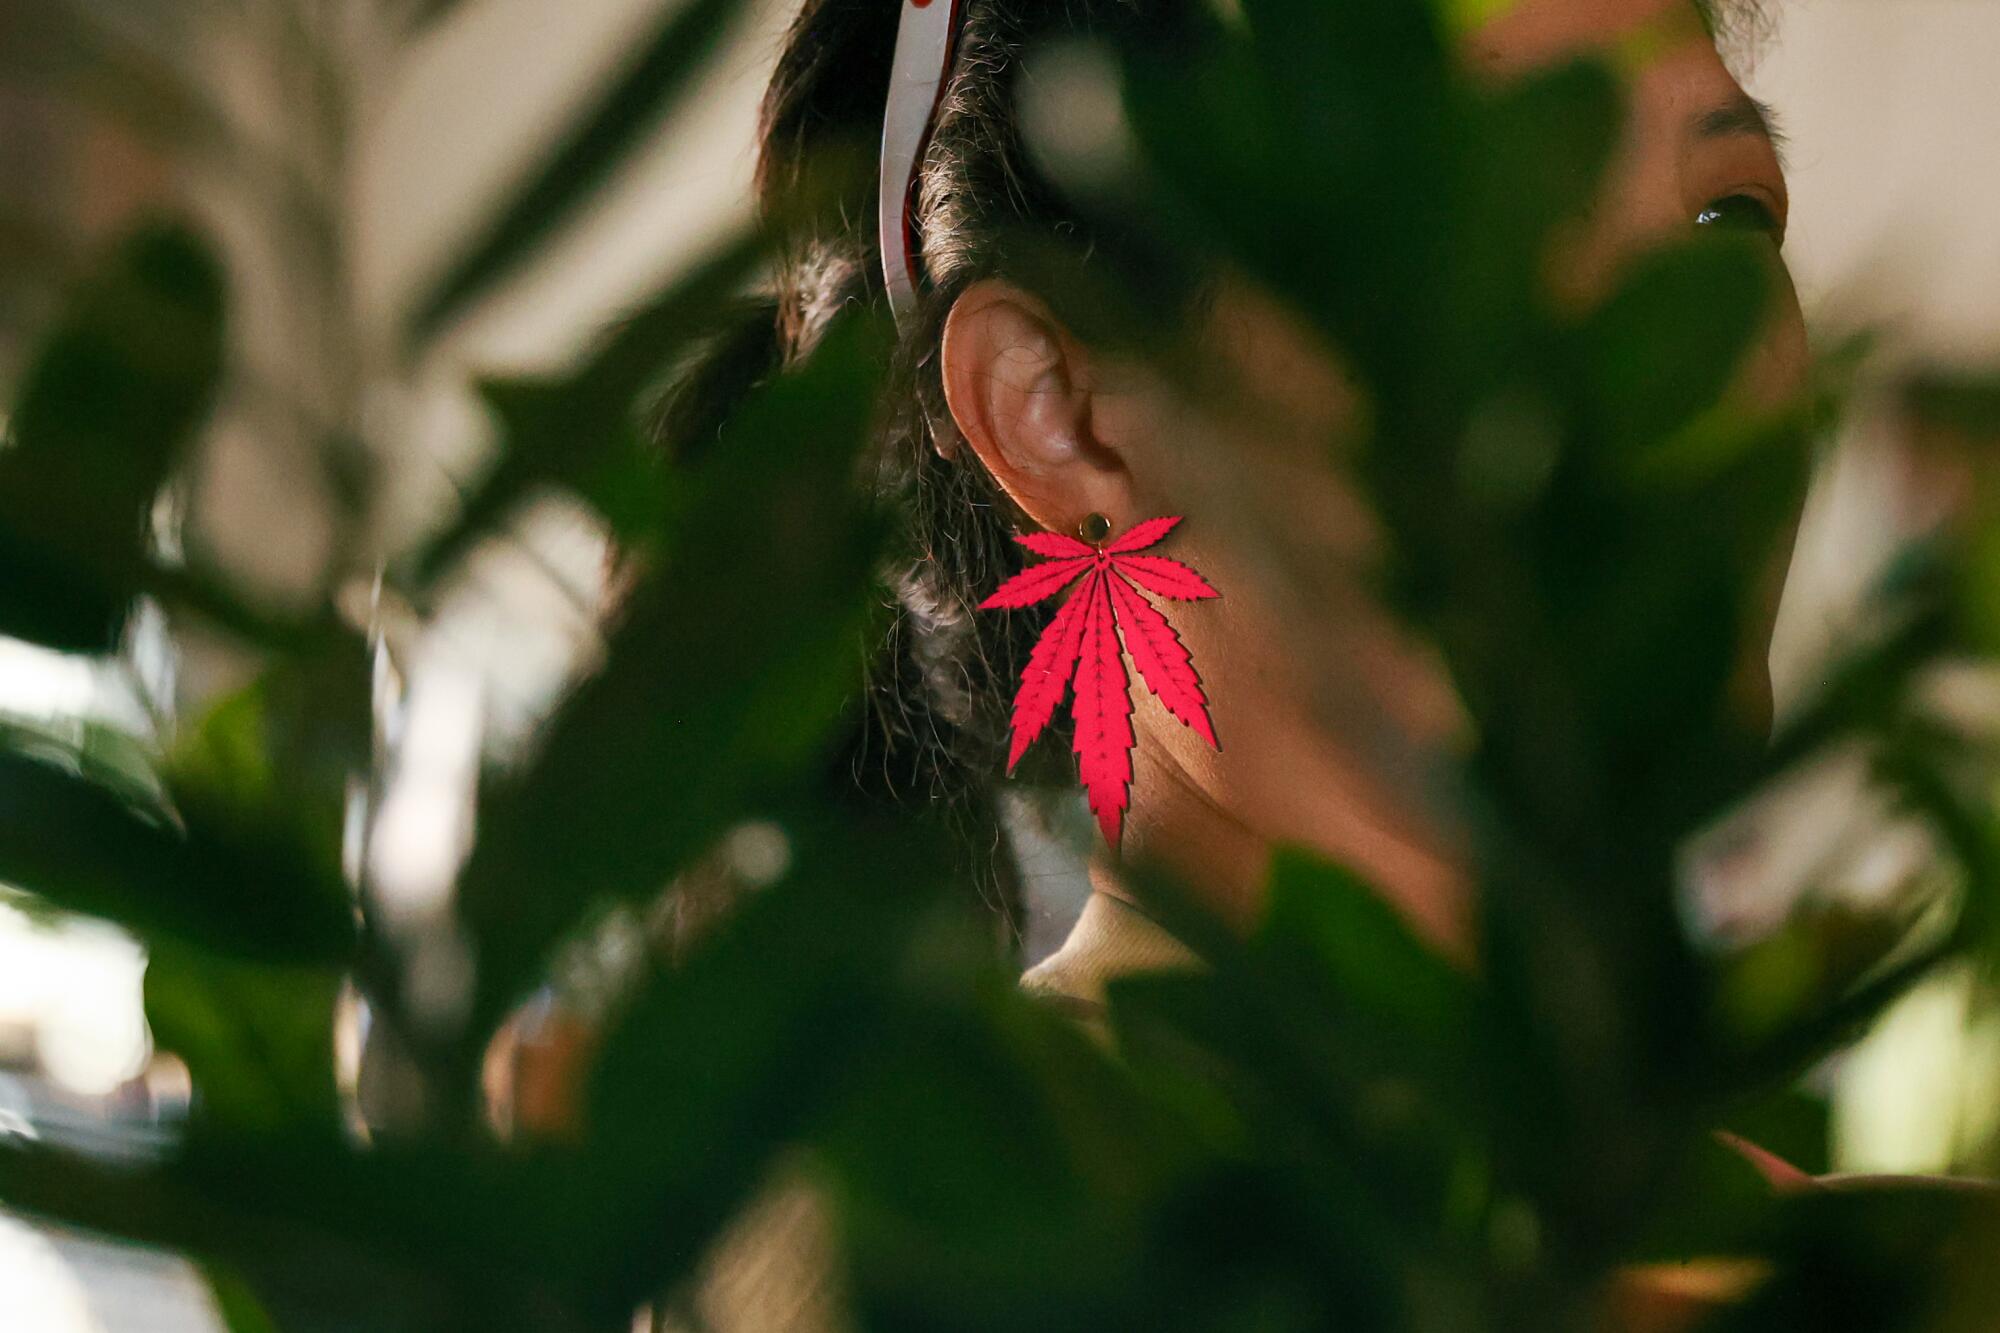 A woman wearing a red earring shaped like a marijuana leaf